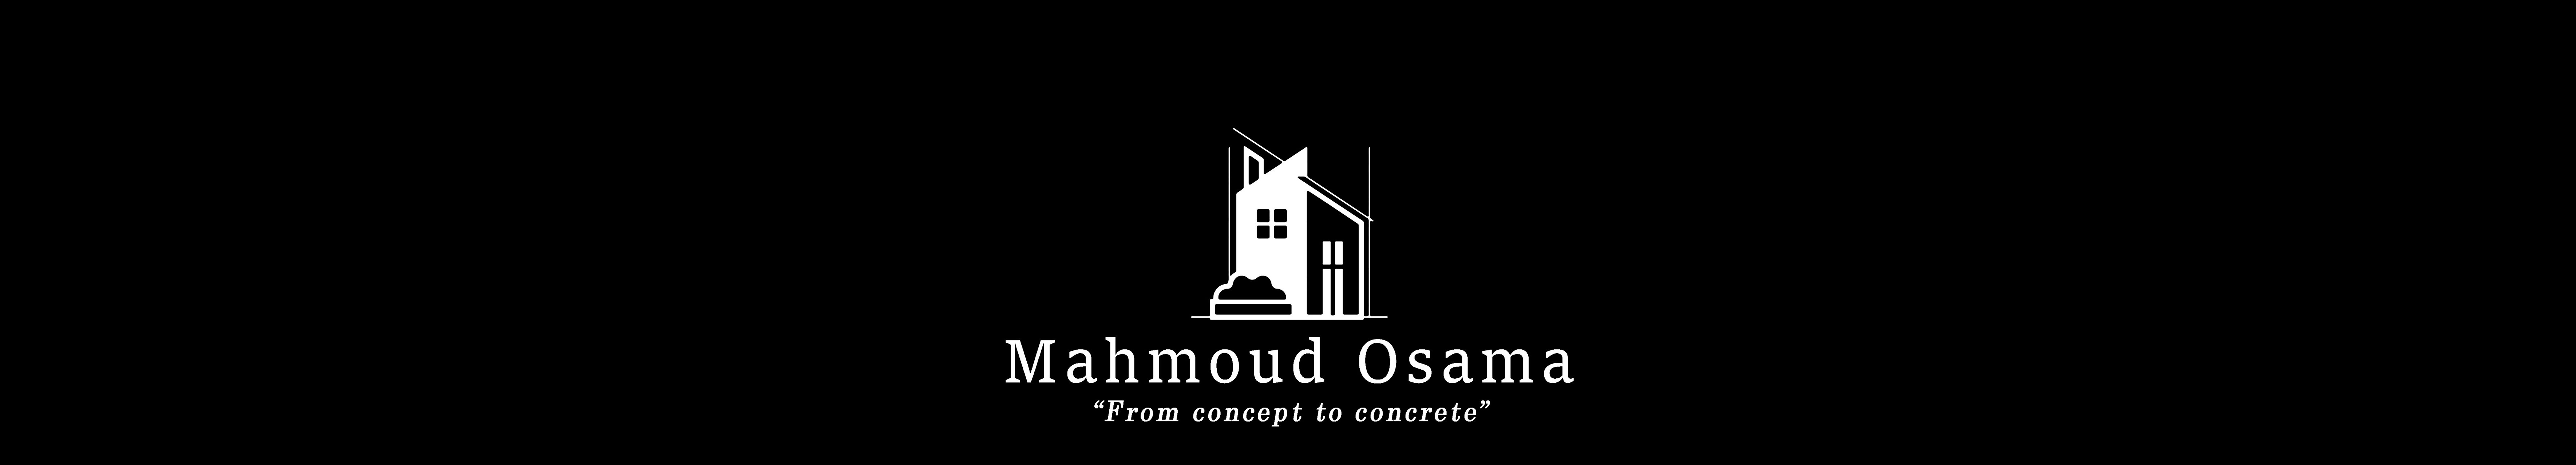 Mahmoud osama's profile banner